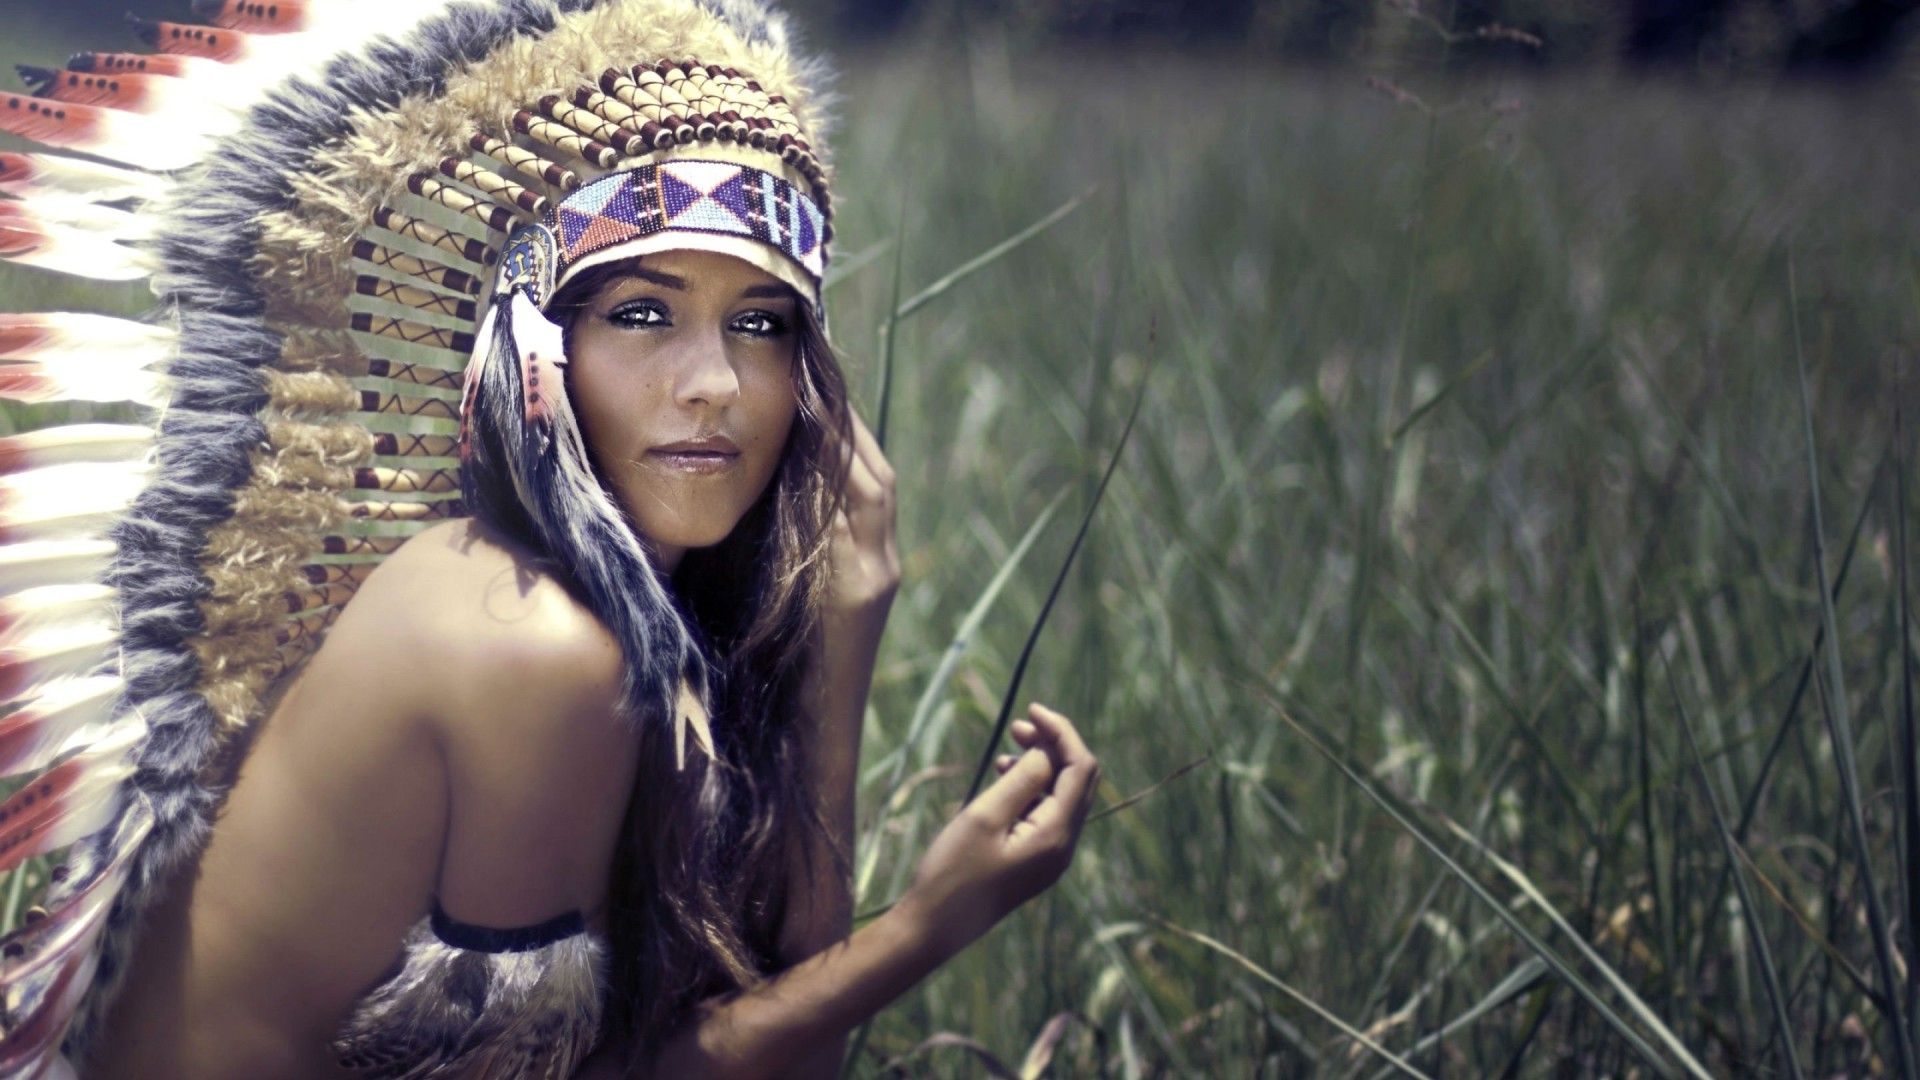 Native American Indian Model 1920x1080 (1080p) - Wallpaper - Free ...